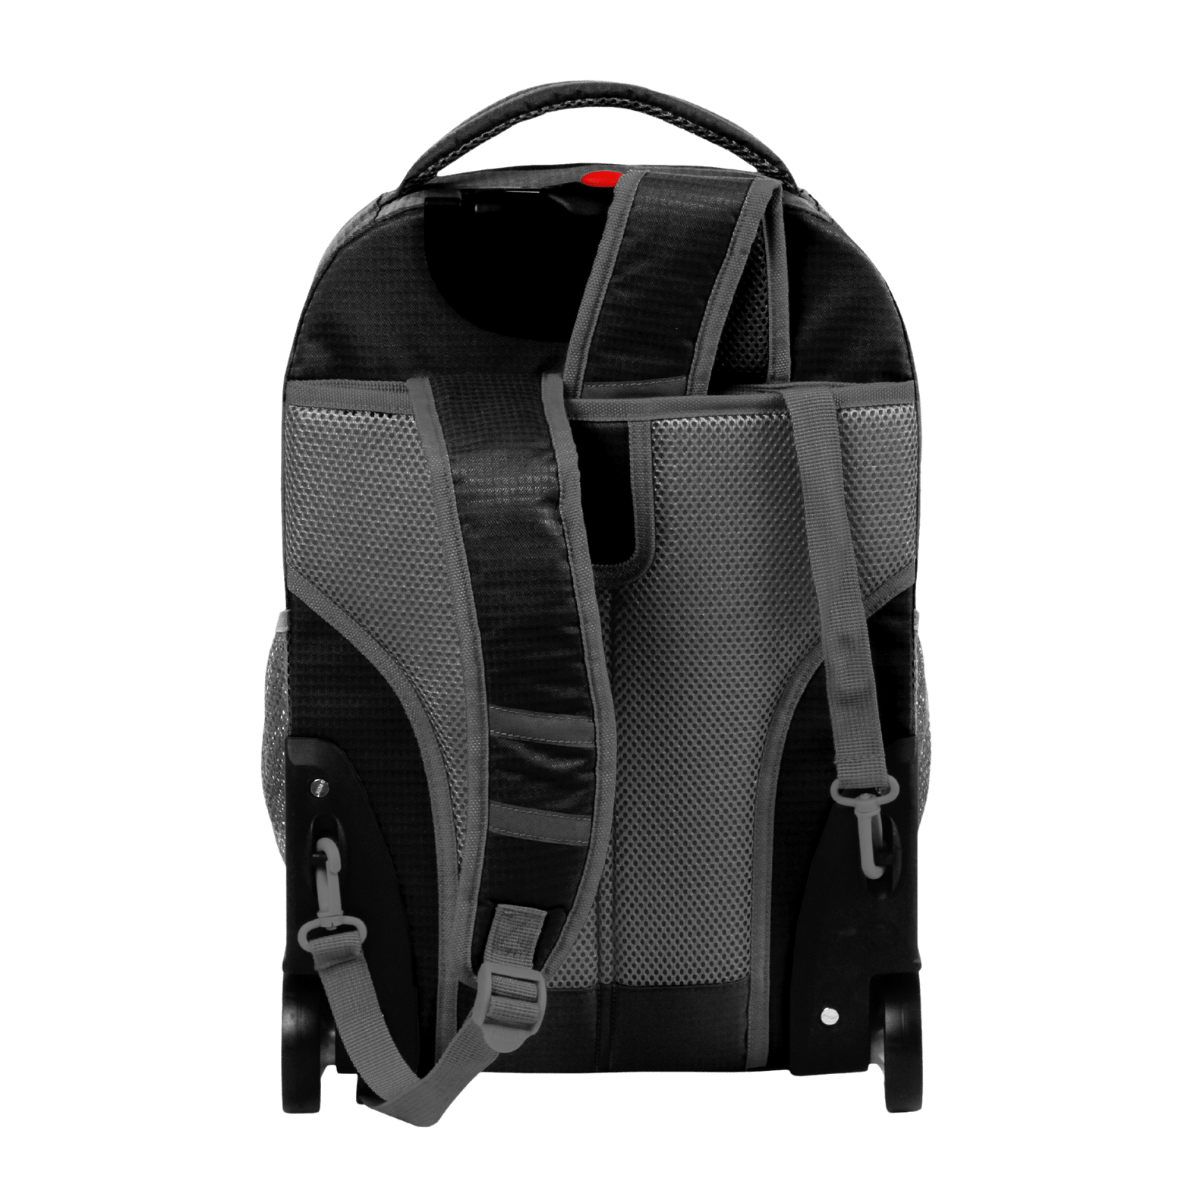 Sunlight Rolling Backpack (18 Inch) - JWorldstore